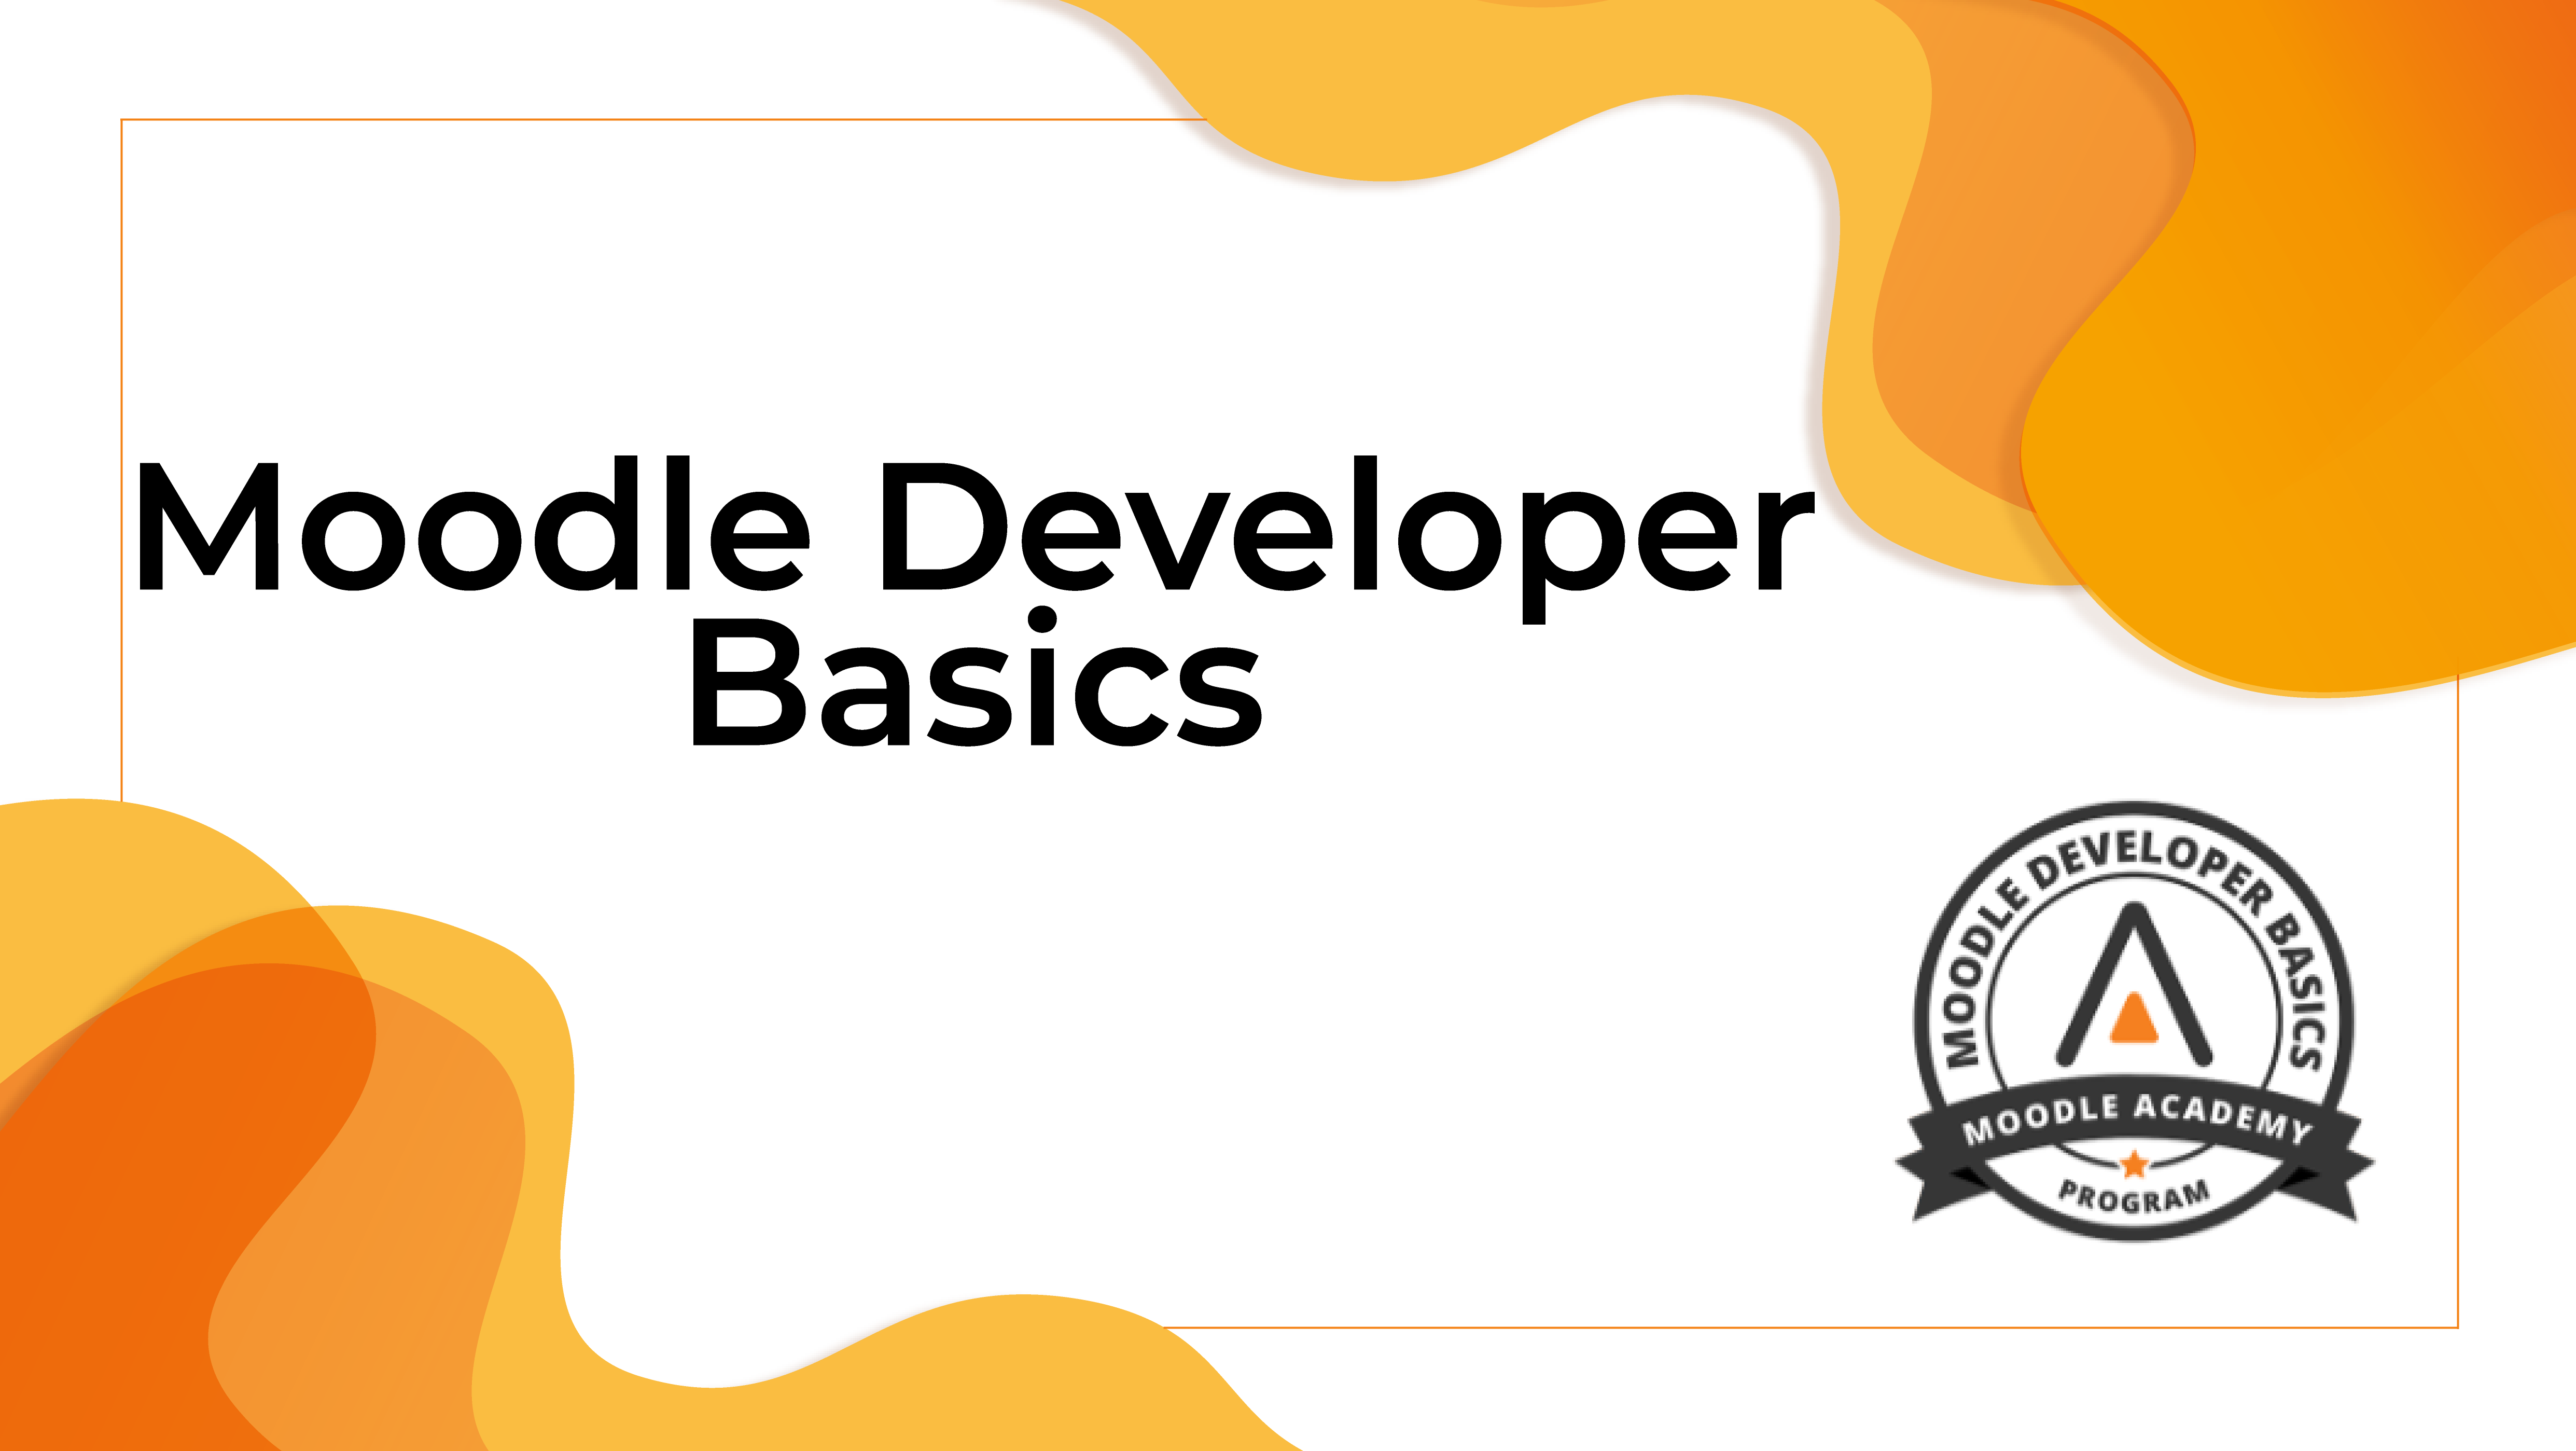 Moodle Developer Basics